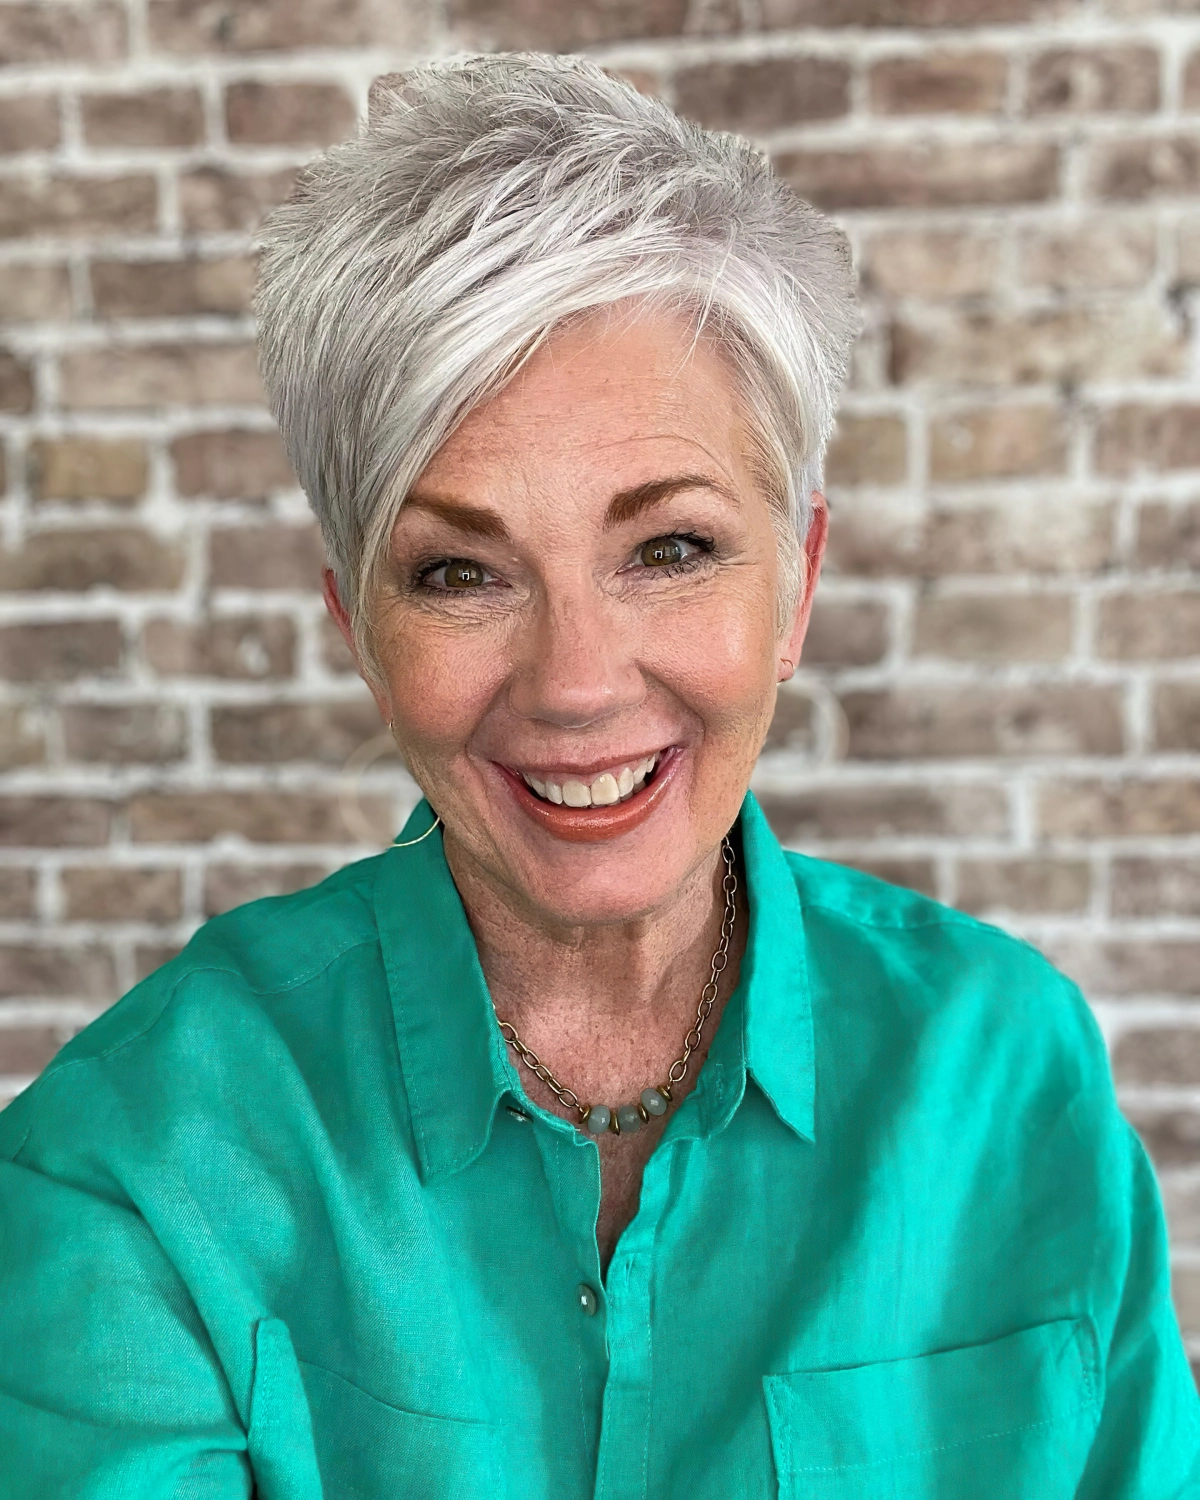 chemise turquoise coupe 60 ans femme cheveux courts blanc gris